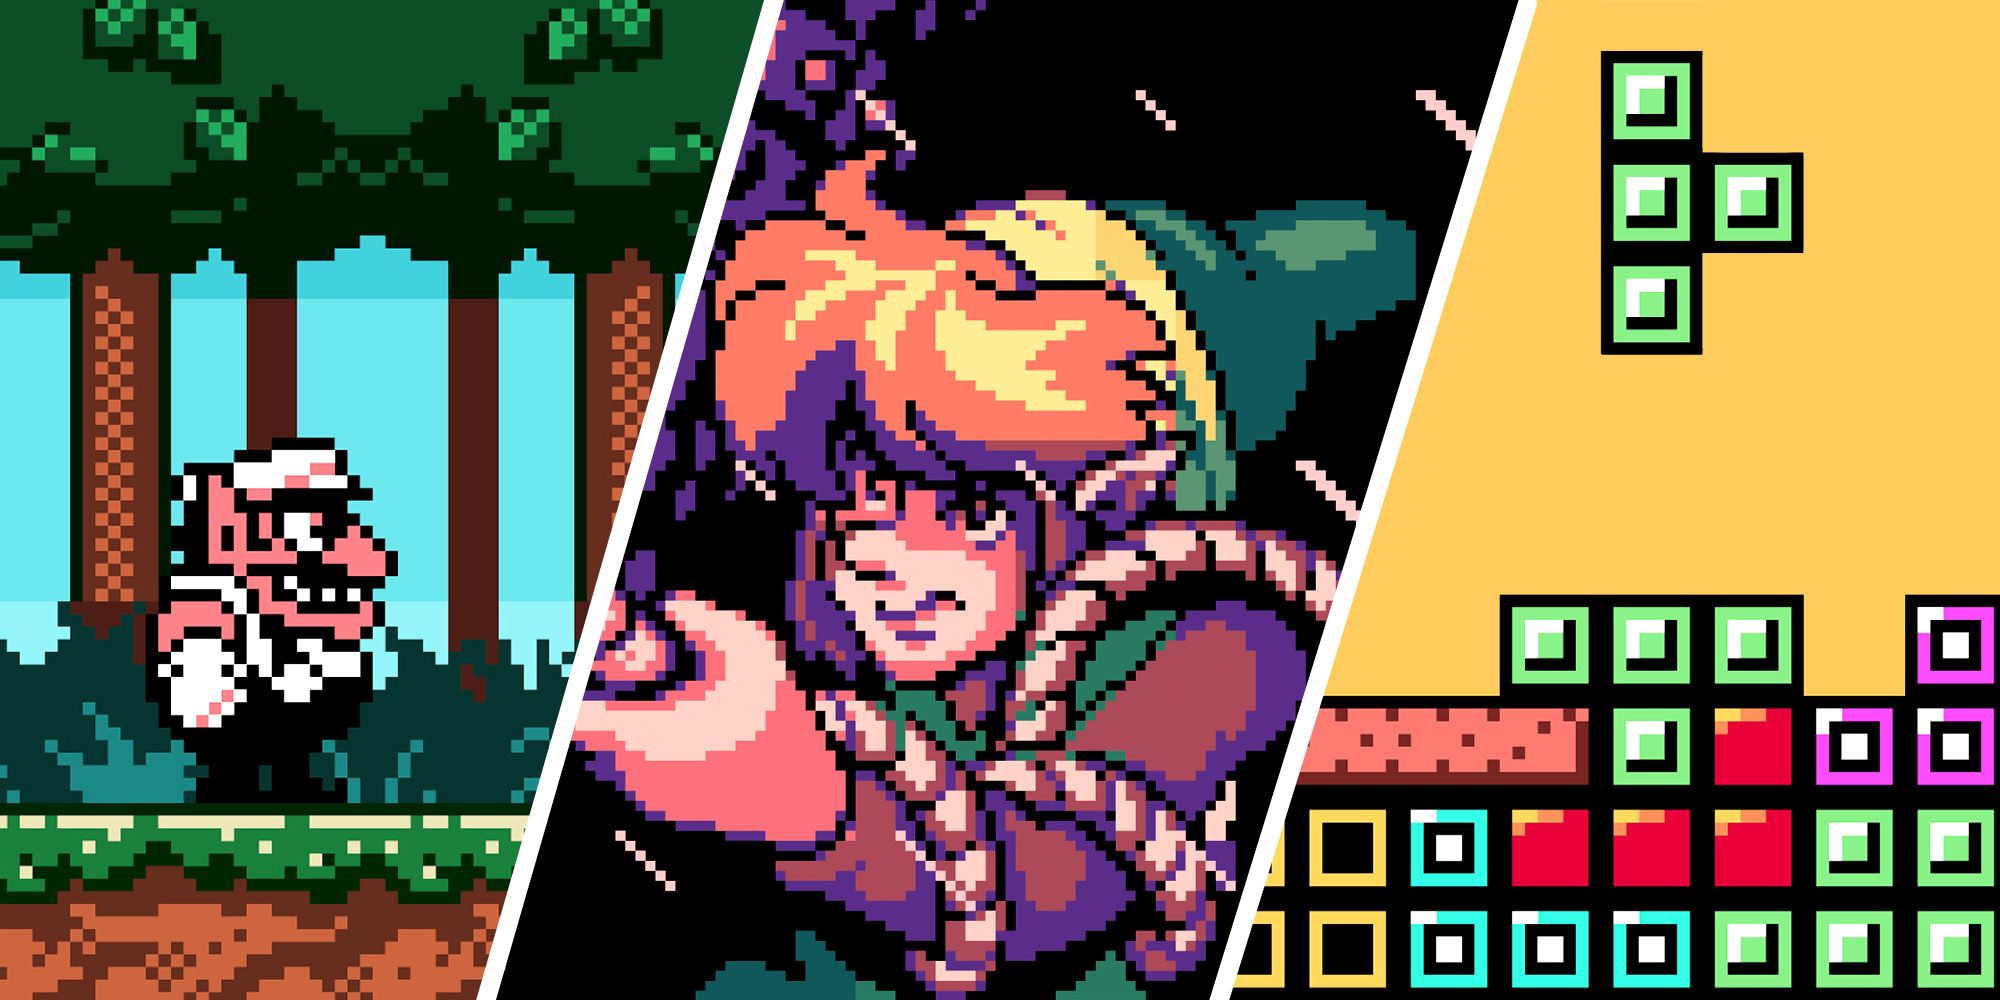 Best Game Boy Color Games - Split Imaege Of Wario Land 3, The Legend Of Zelda Link's Awakening, And Tetris DX